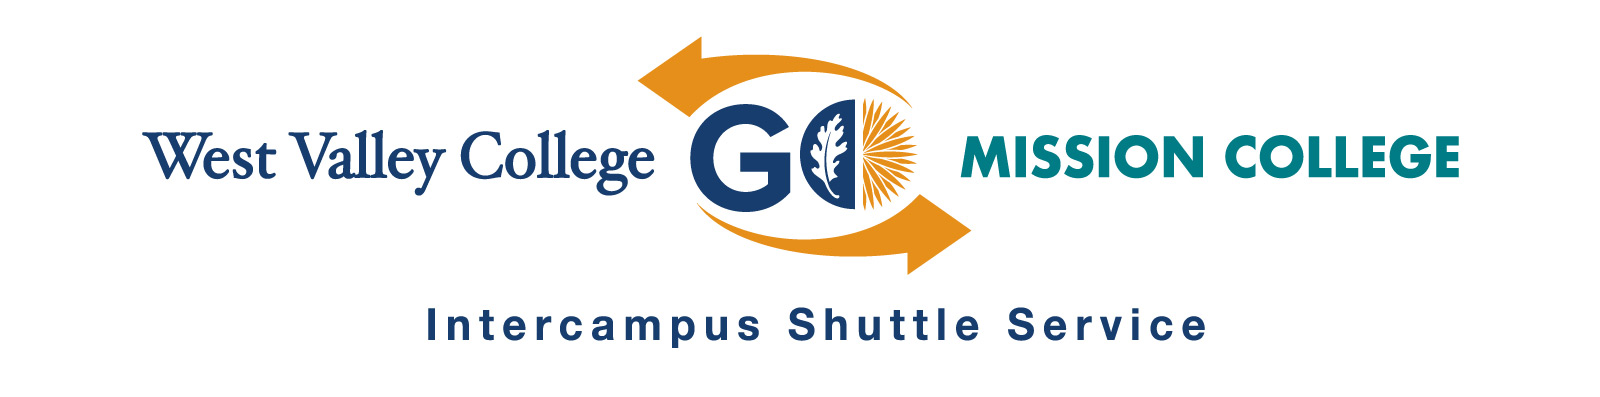 Go Shuttle Intercampus logo